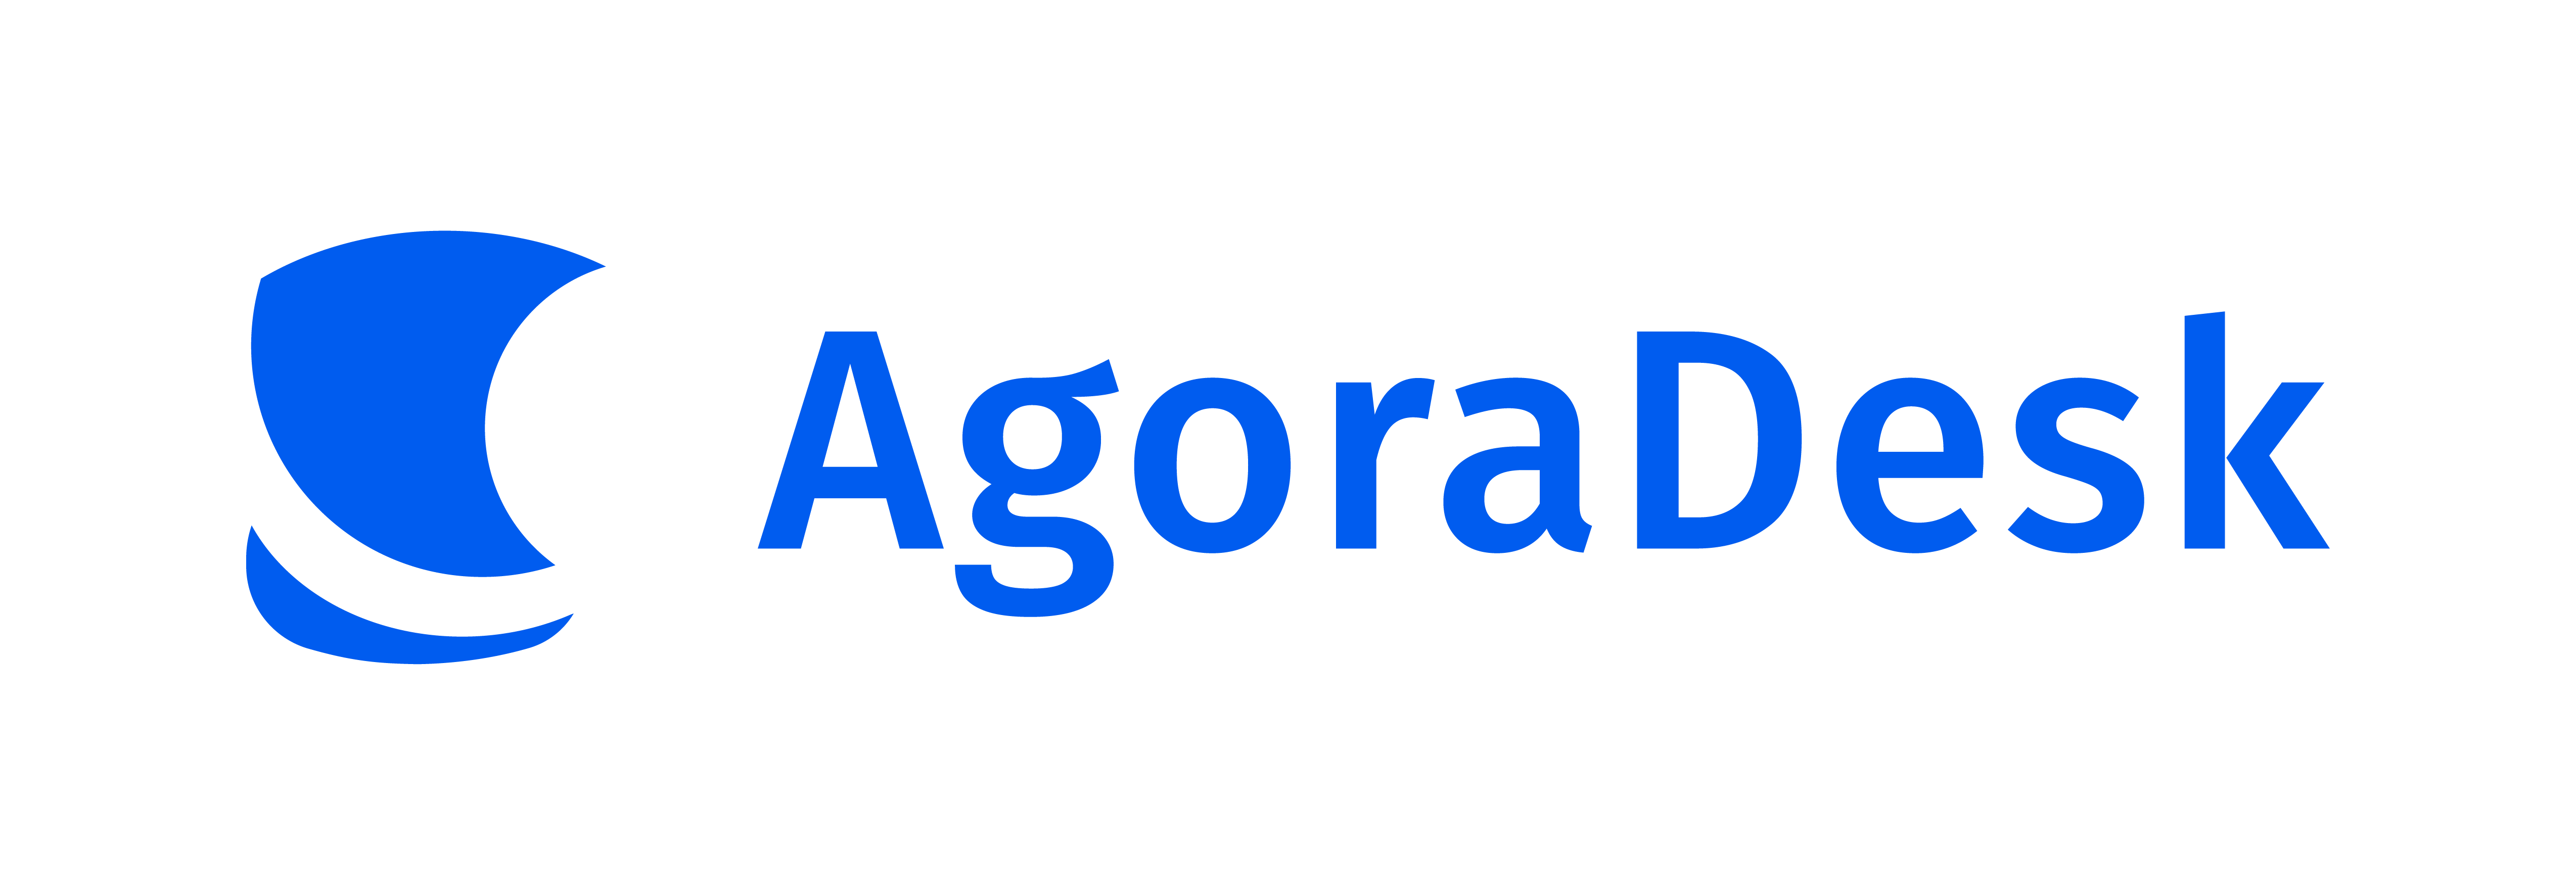 AgoraDesk avatar.png